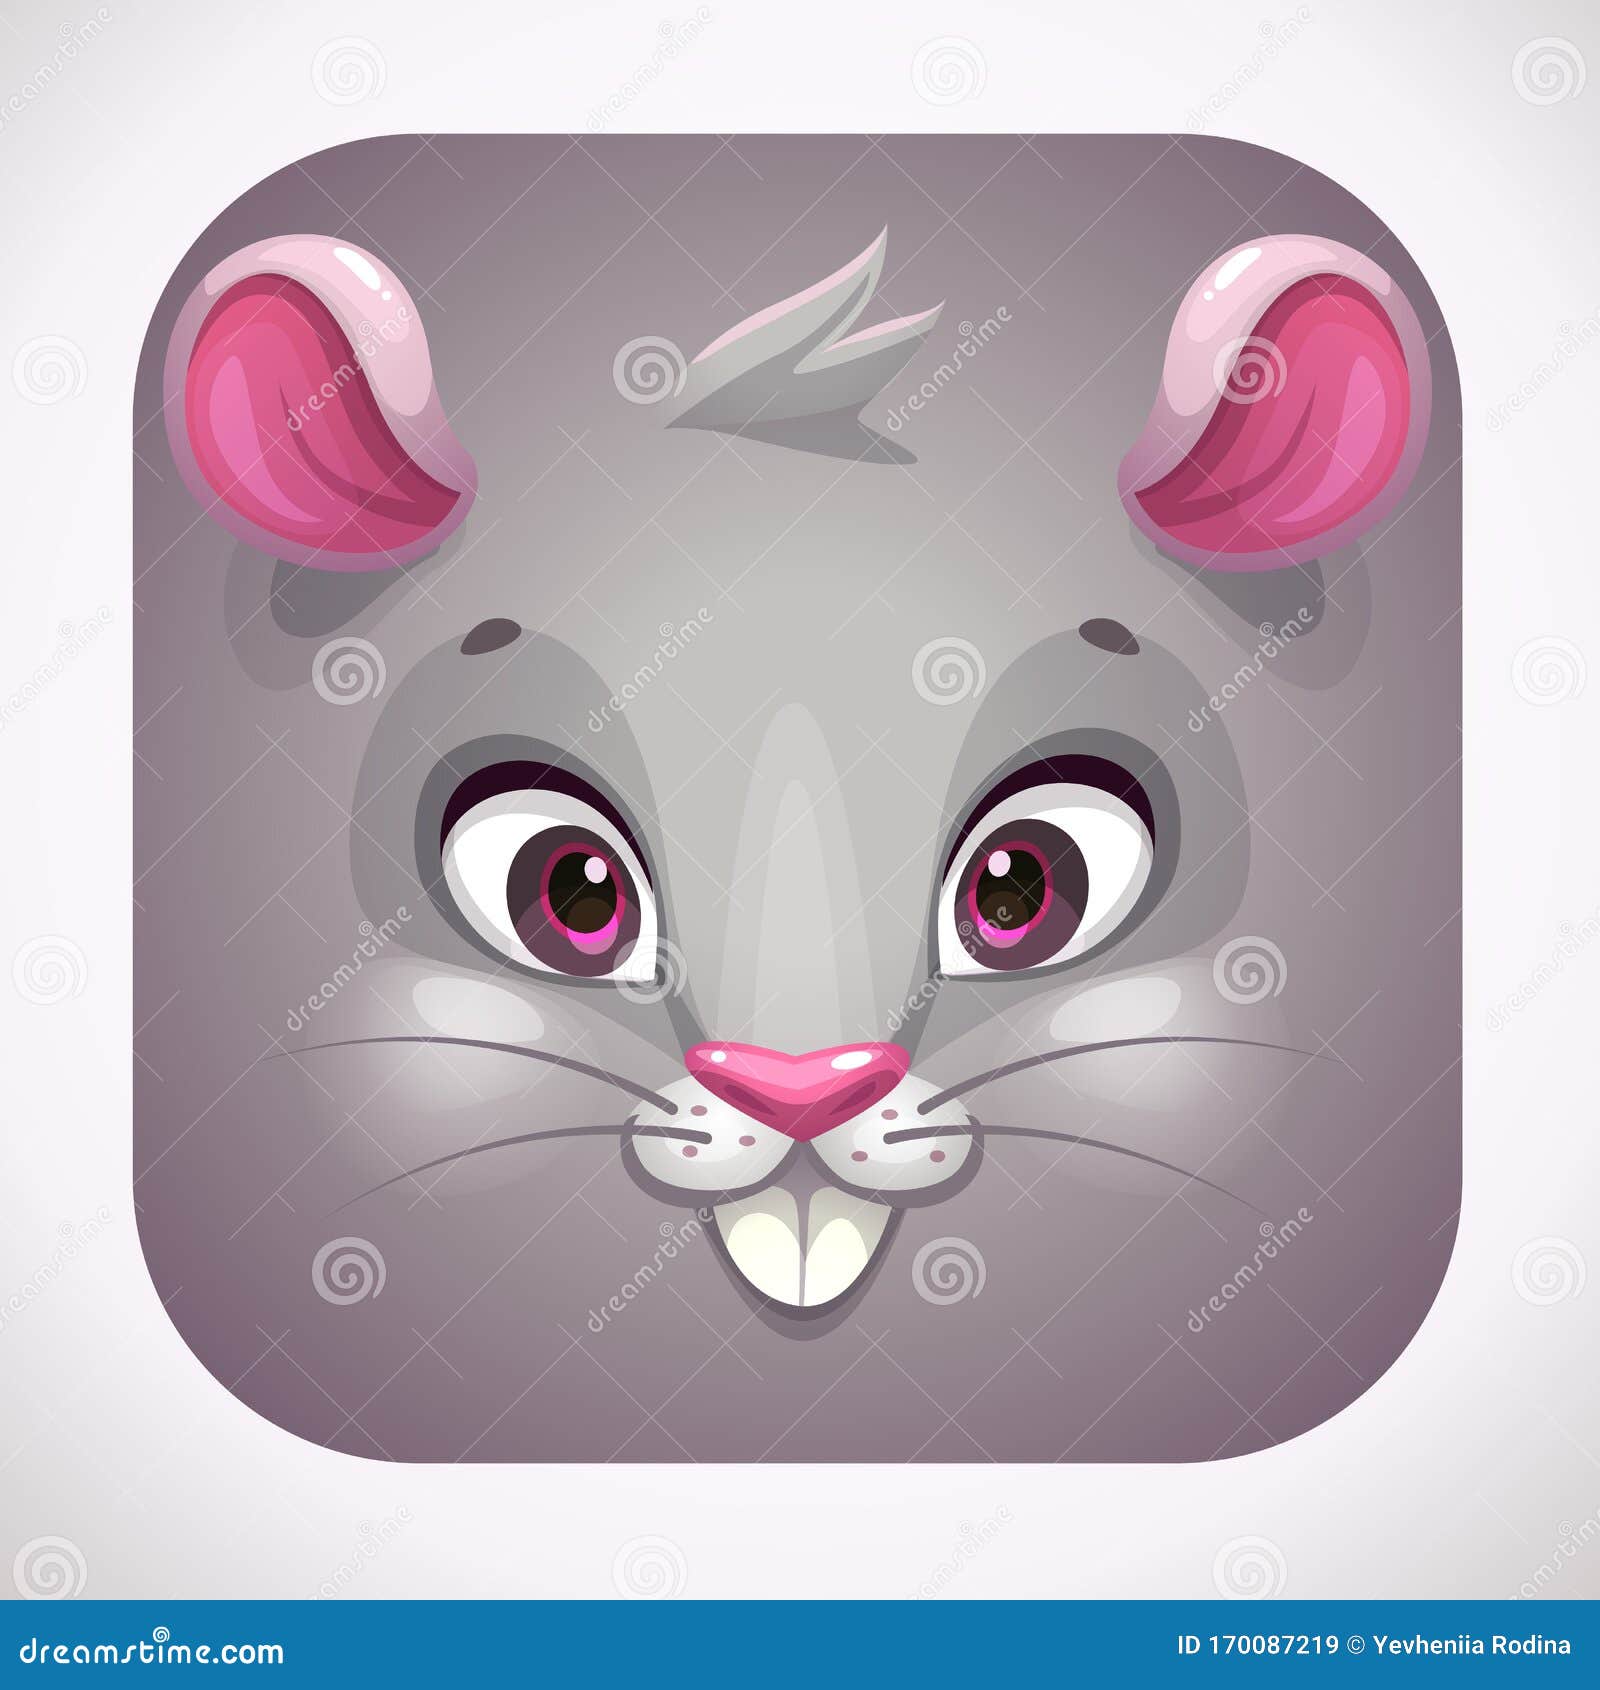 Funny Gray Mouse Face Cartoon App Icon For Game Logo Design Stock Vector Illustration Of Mice Button